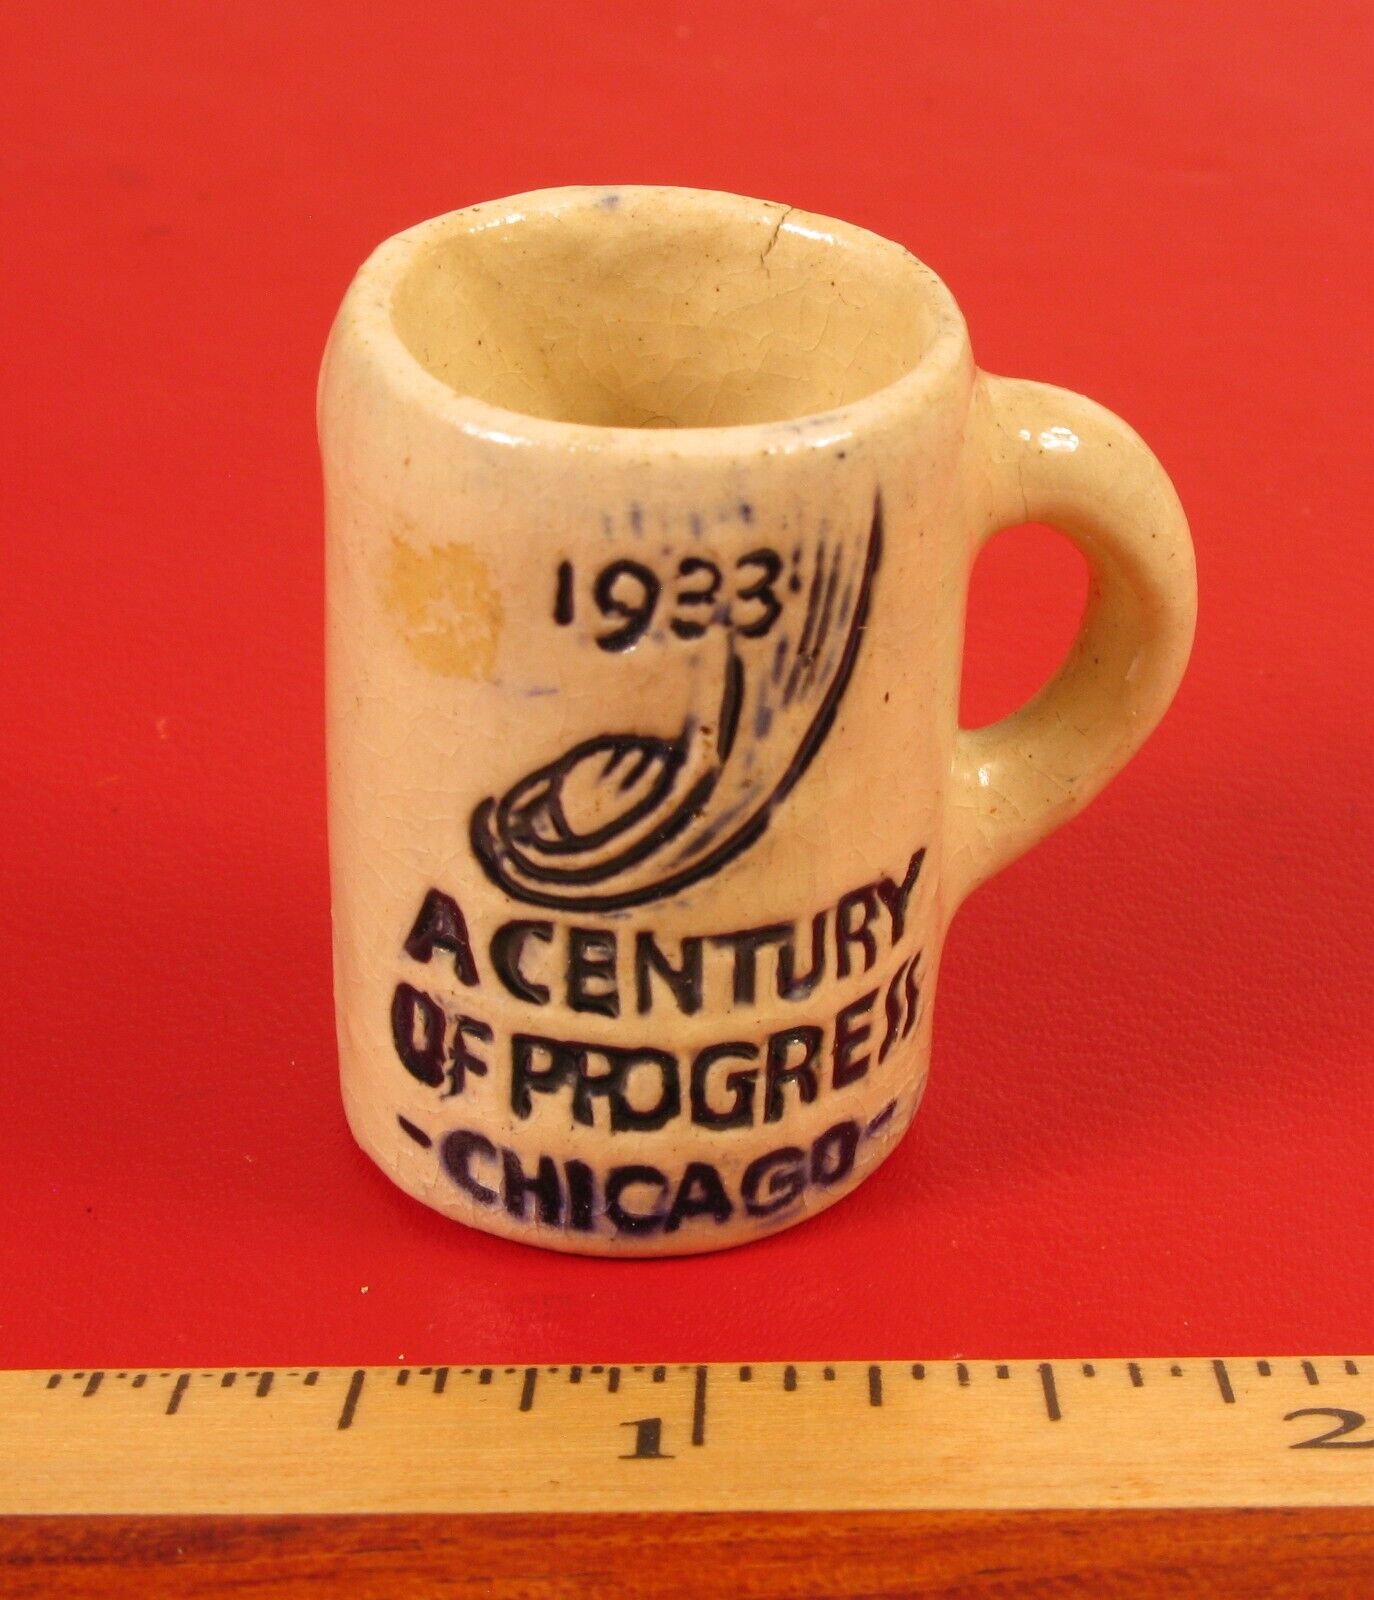 ANTIQUE 1933 CHICAGO WORLDS FAIR MINIATURE BEER ALE MUG A CENTURY OF PROGRESS 